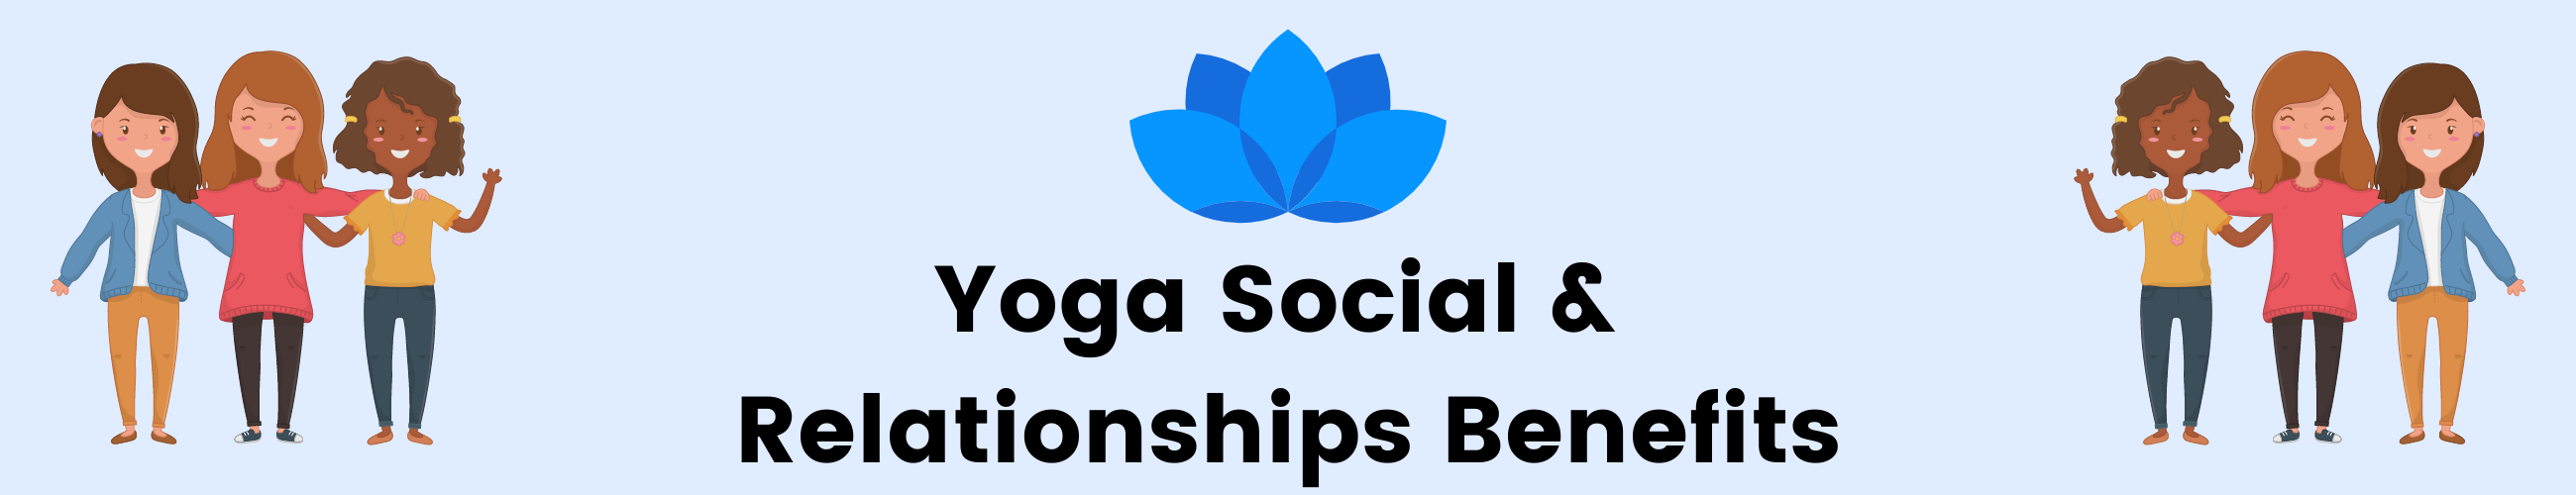 Yoga Social & Relationships Benefits